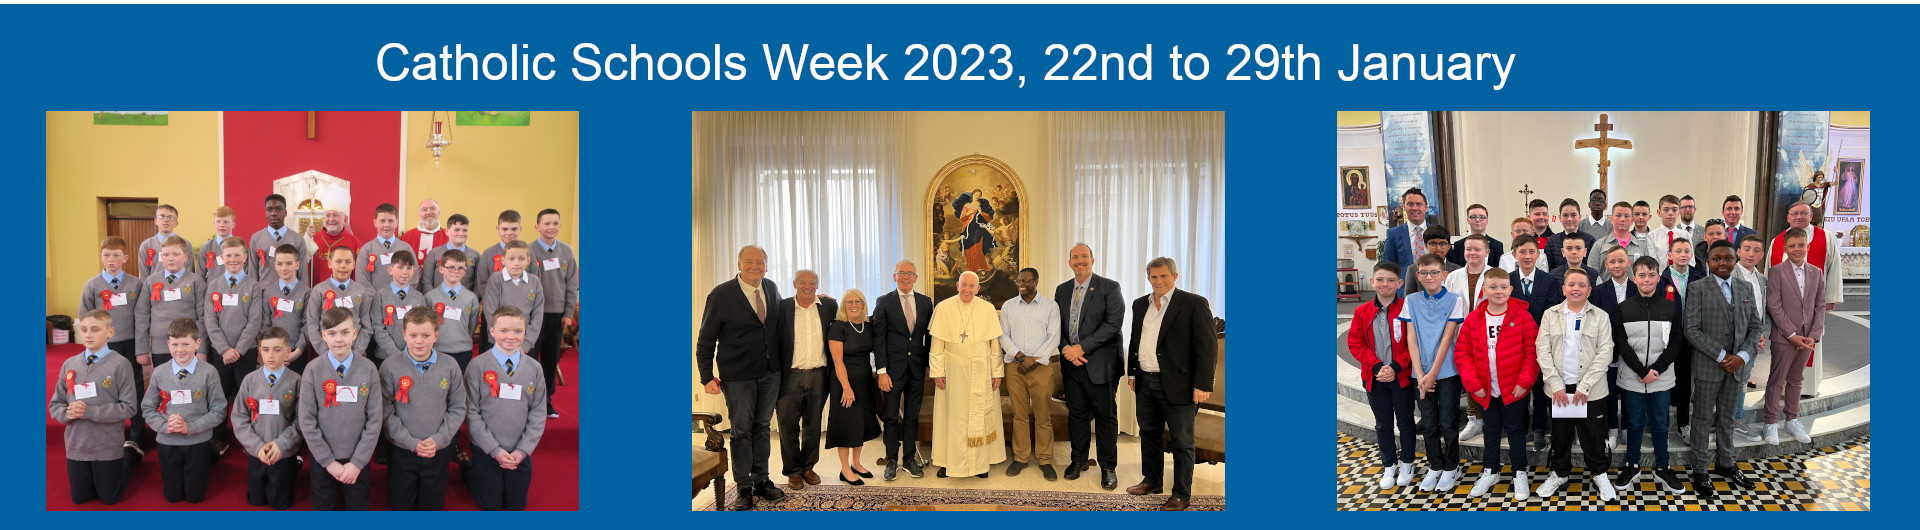 Catholic Schools Week January 2023